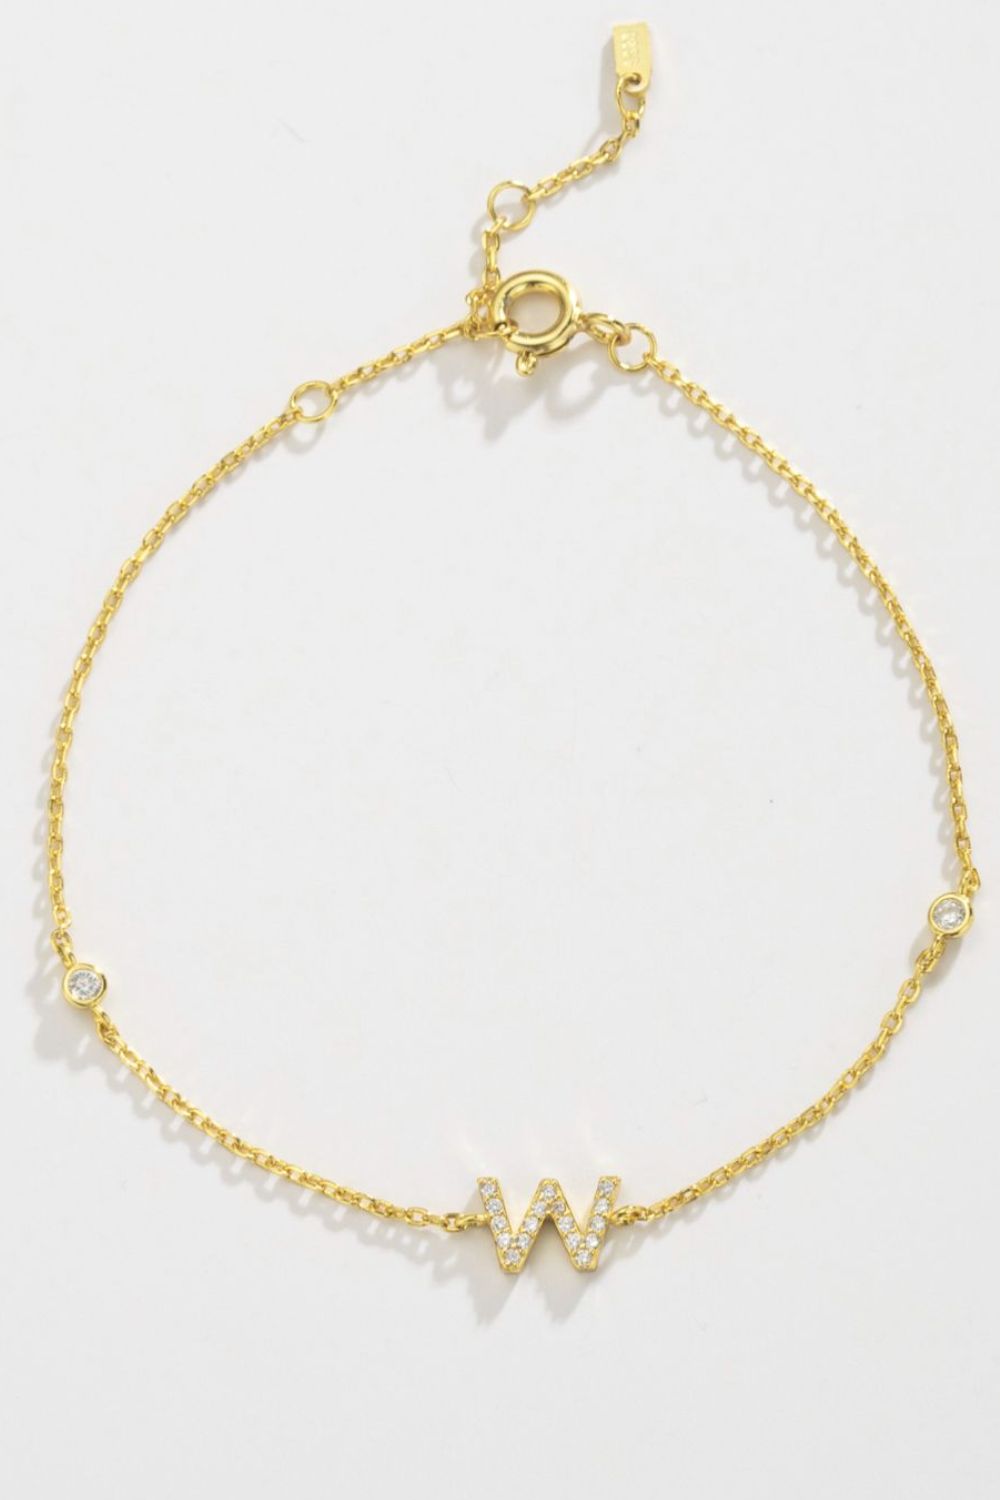 V To Z Zircon 925 Sterling Silver Bracelet - Women’s Jewelry - Bracelets - 9 - 2024